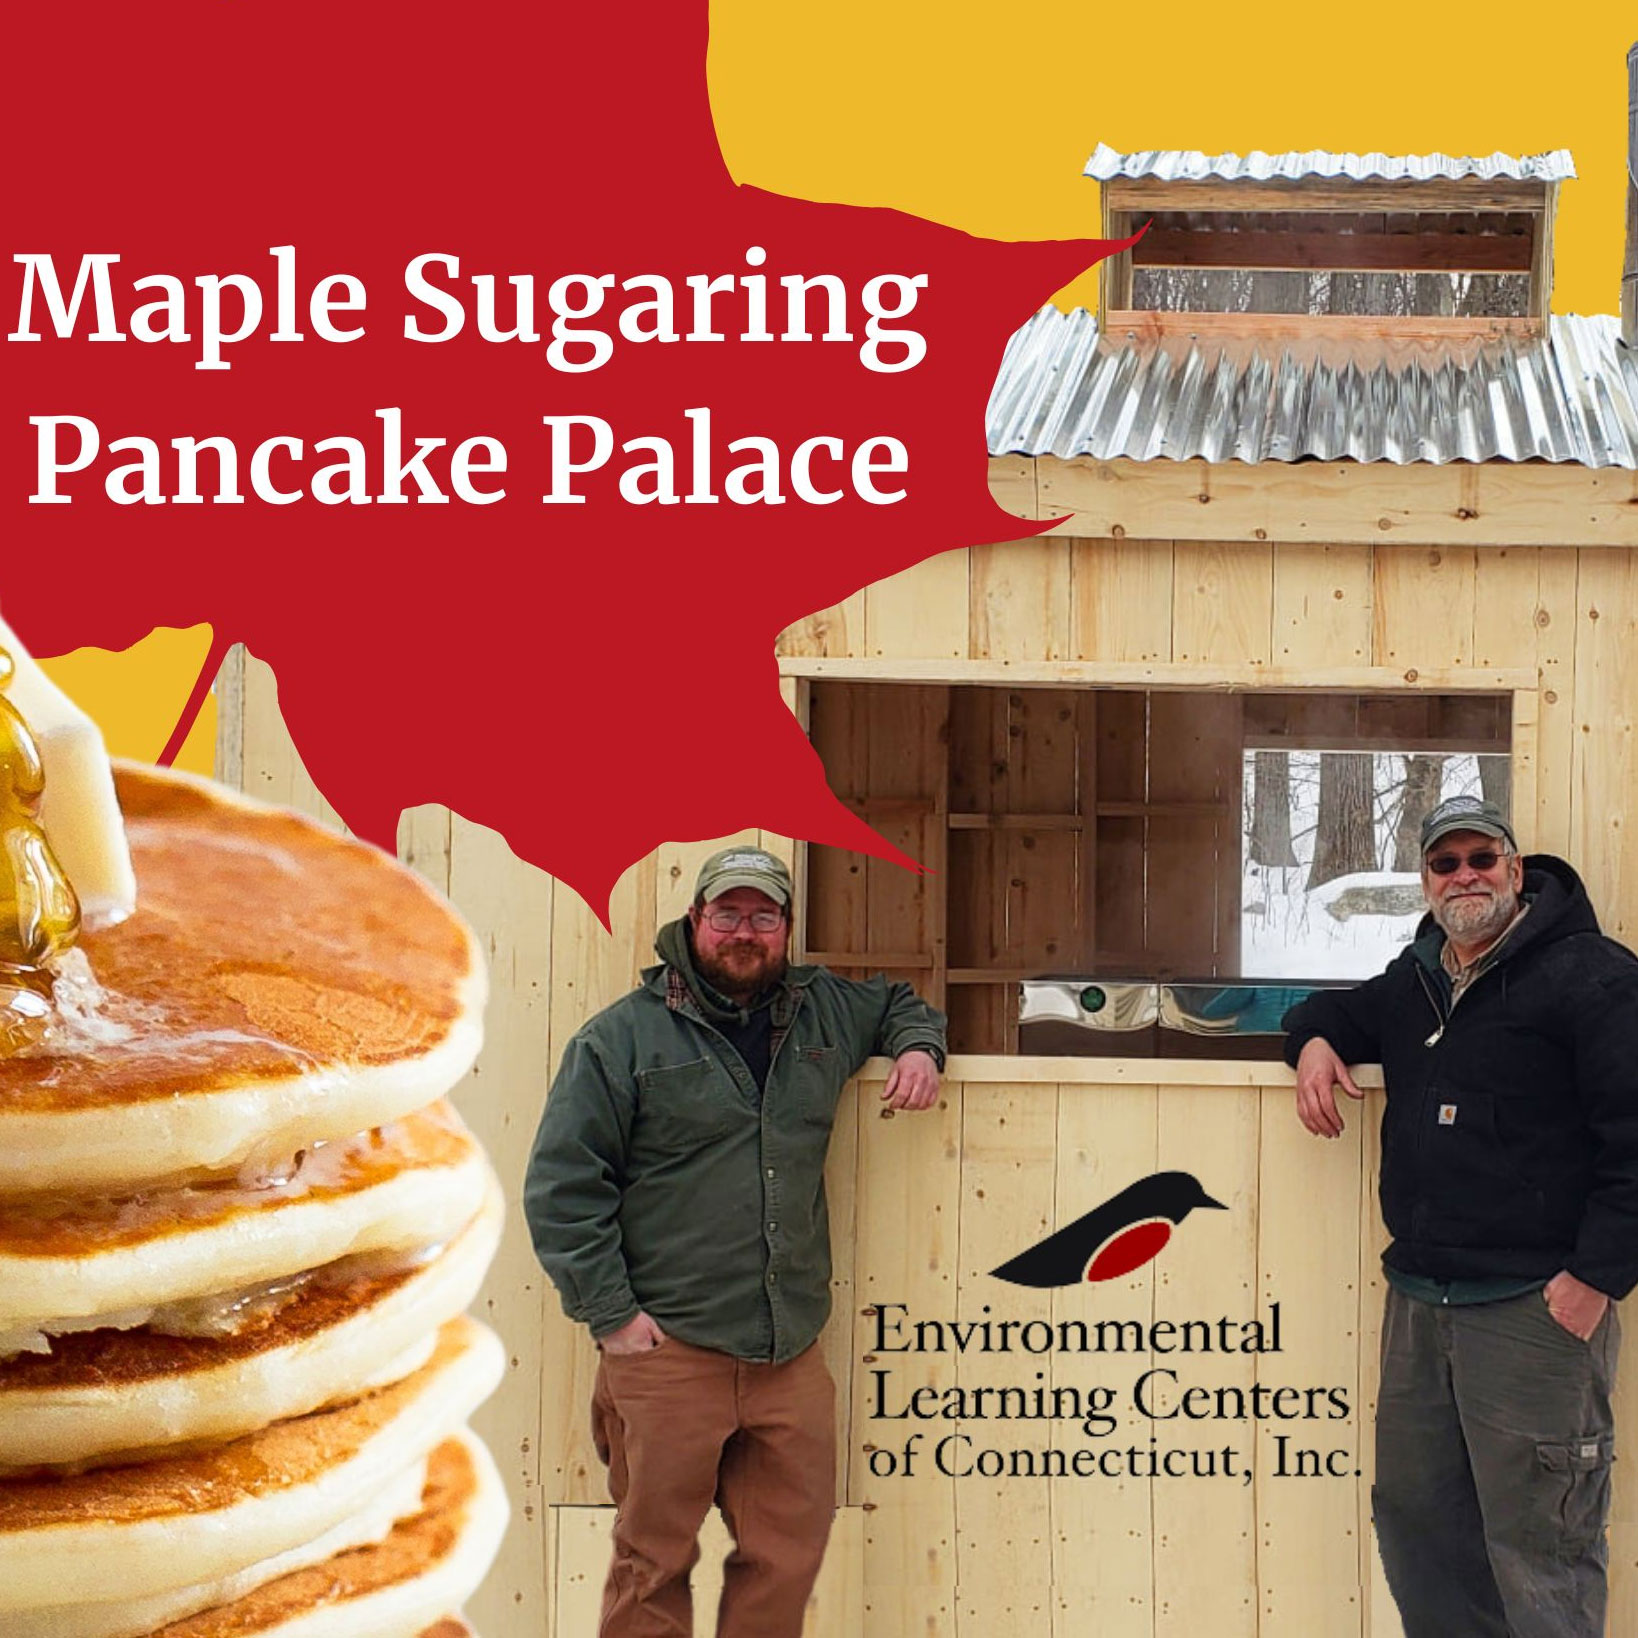 Maple Syrup Sugar Shack & Pancake Eating Contest at Lyman Orchards